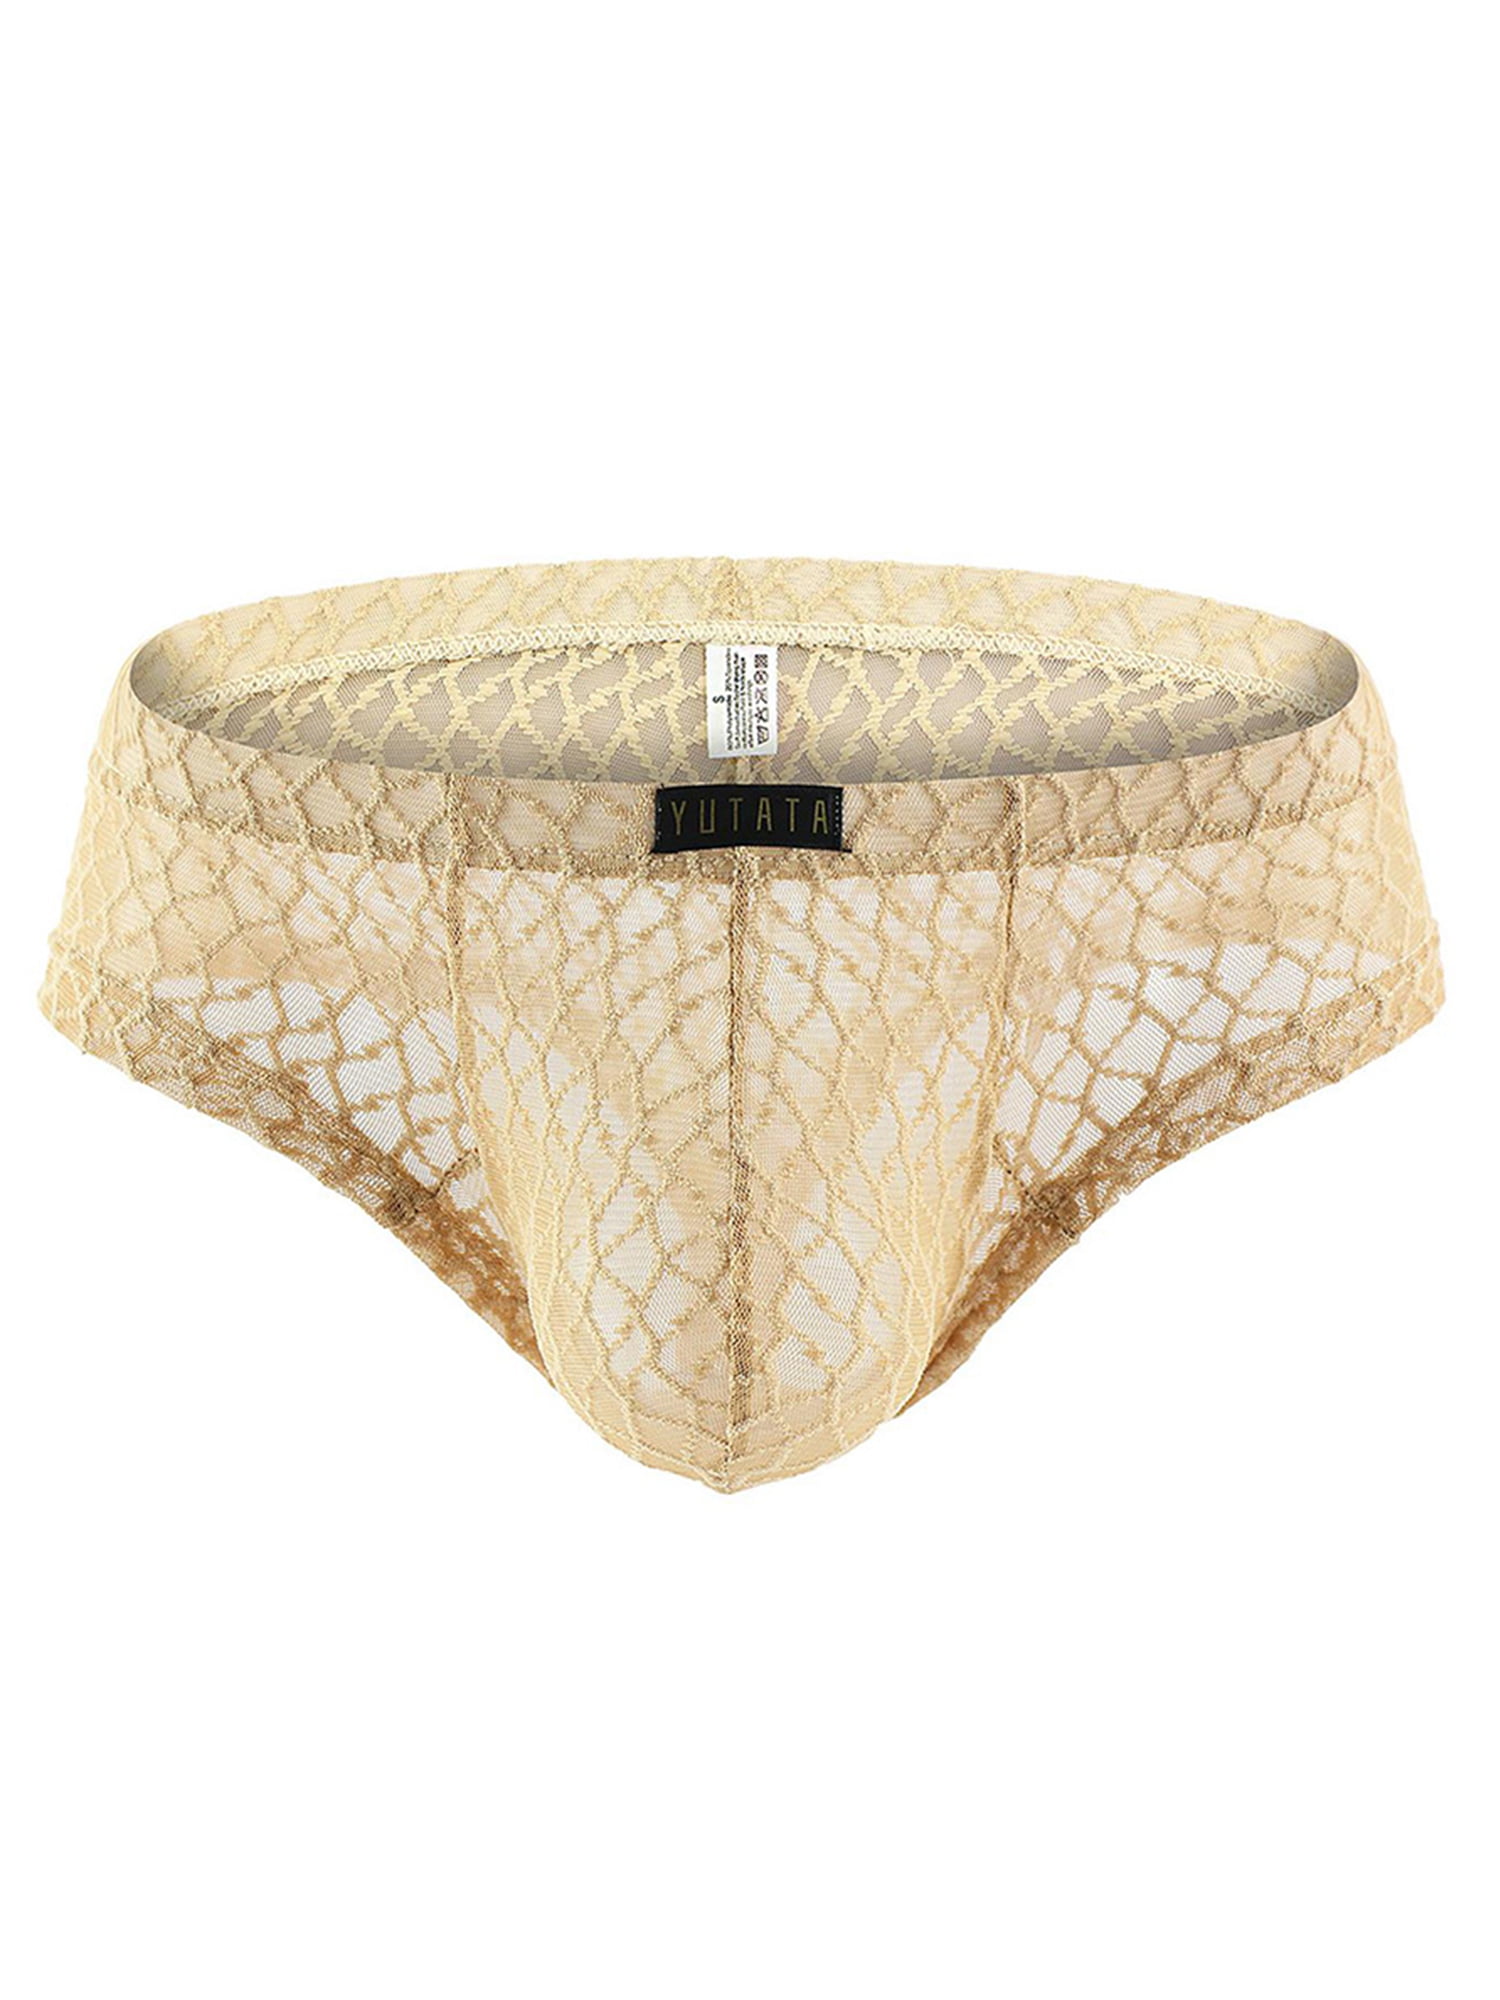 KAMAMEN Men's Seamless Mini Briefs Comfort Underwear With Big Bulge Pouch  Panties Thong Lingerie Underpants Knickers Gray M